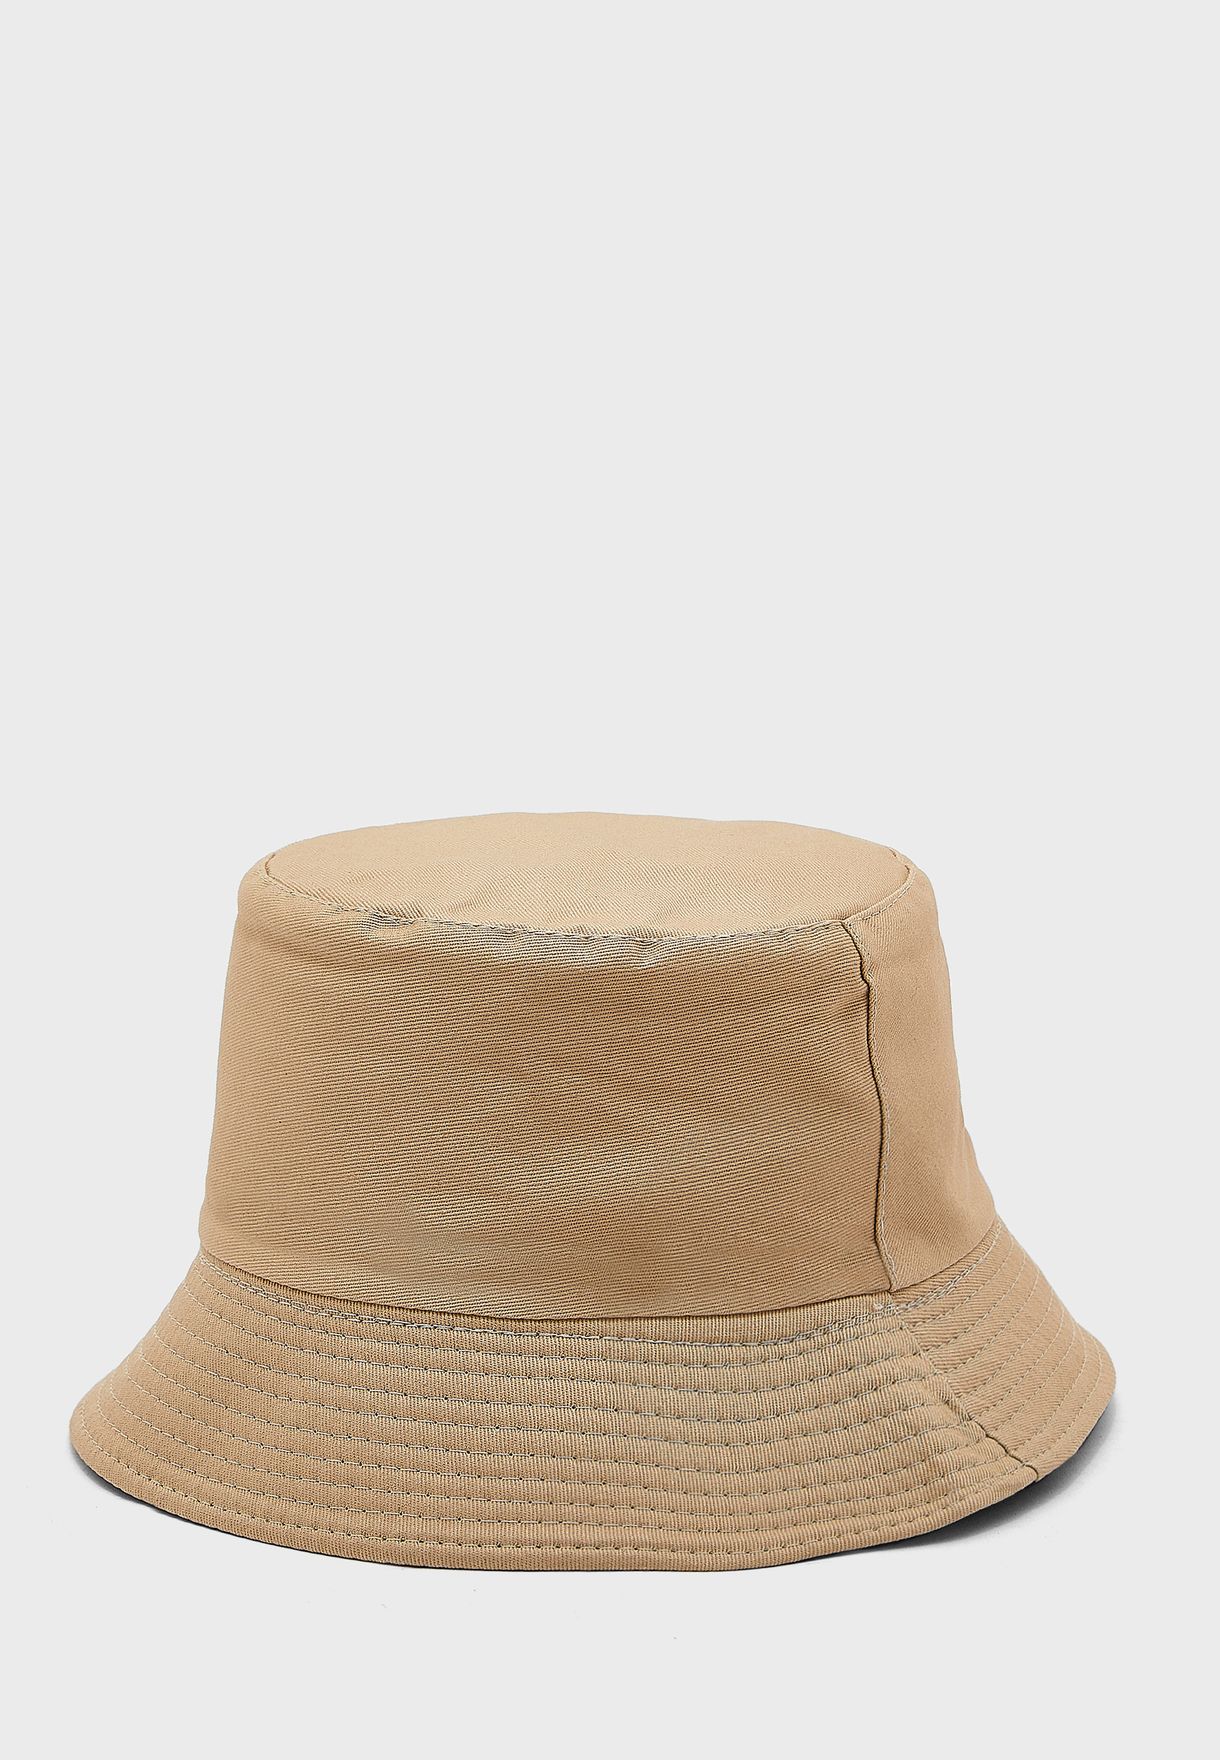 قبعة بوجهين